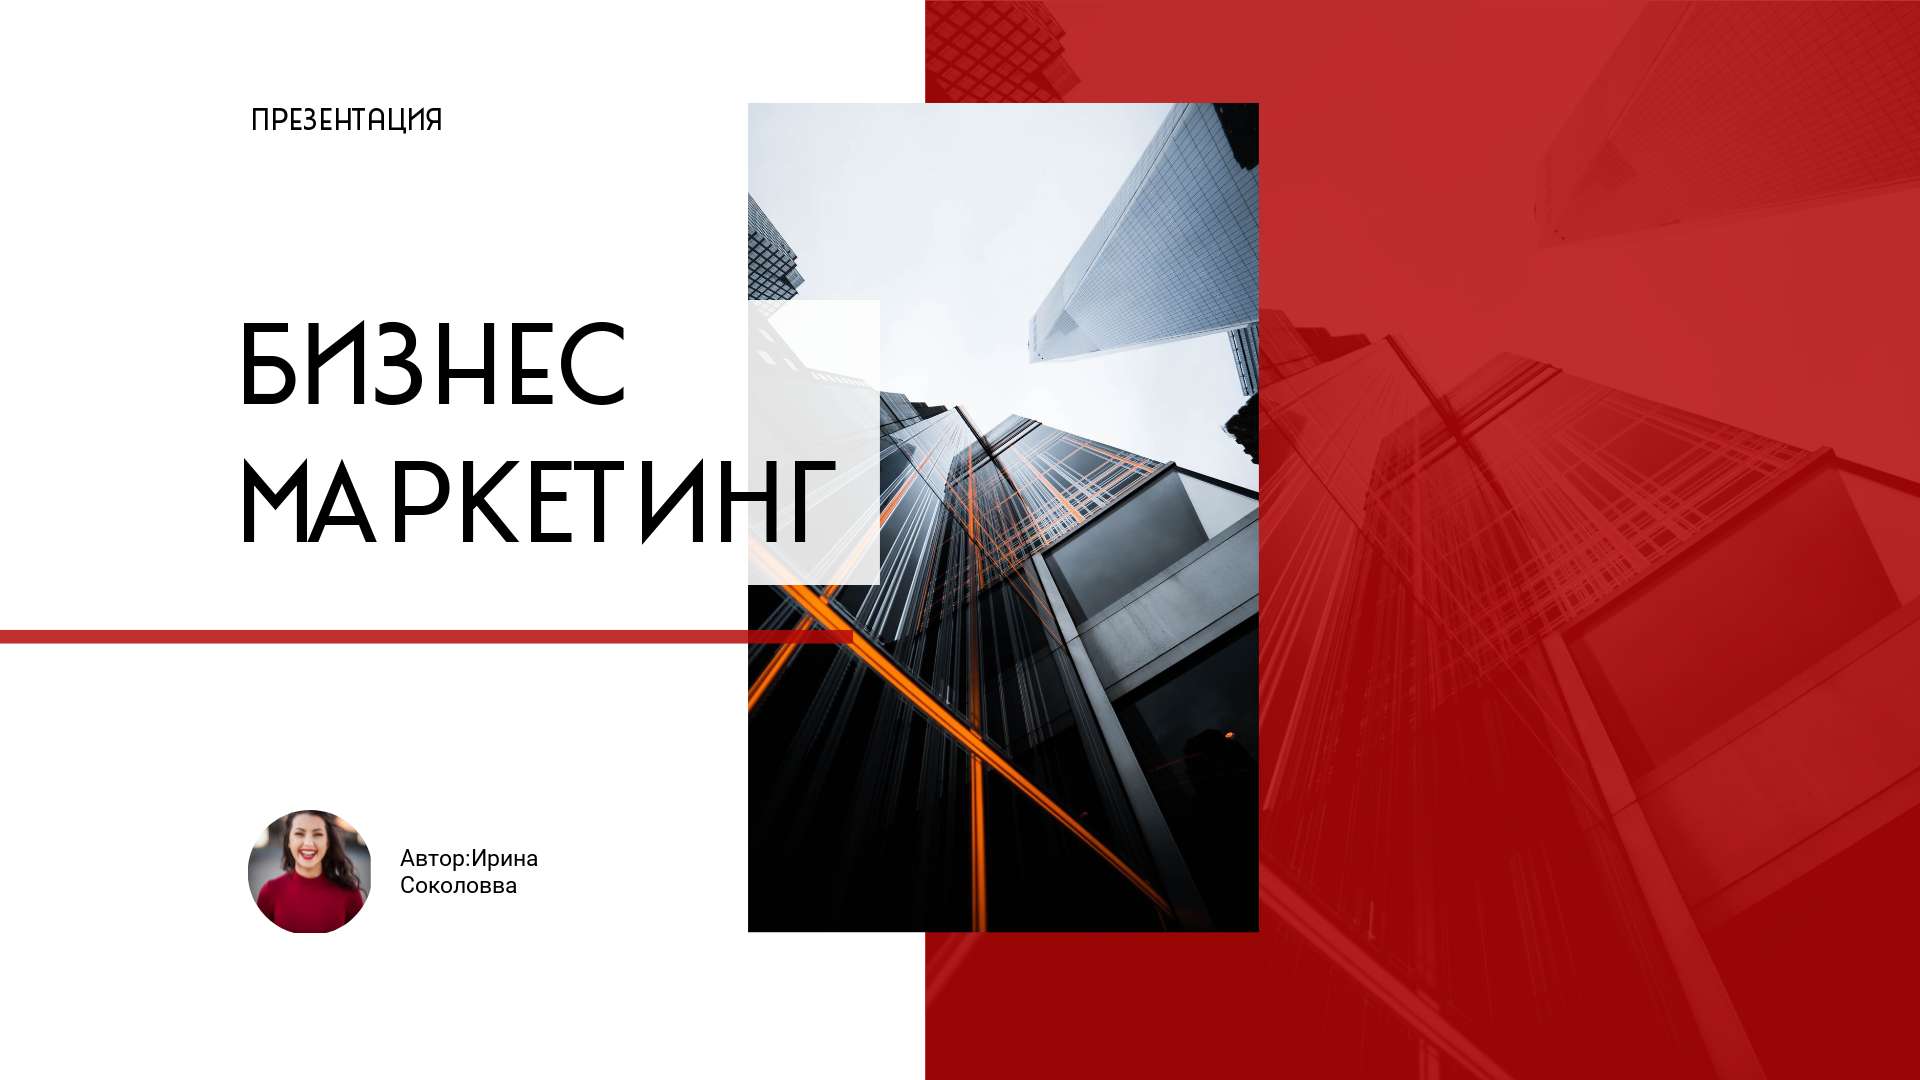 Темно-красная презентация на тему бизнеса и маркетинга с элементами архитектуры